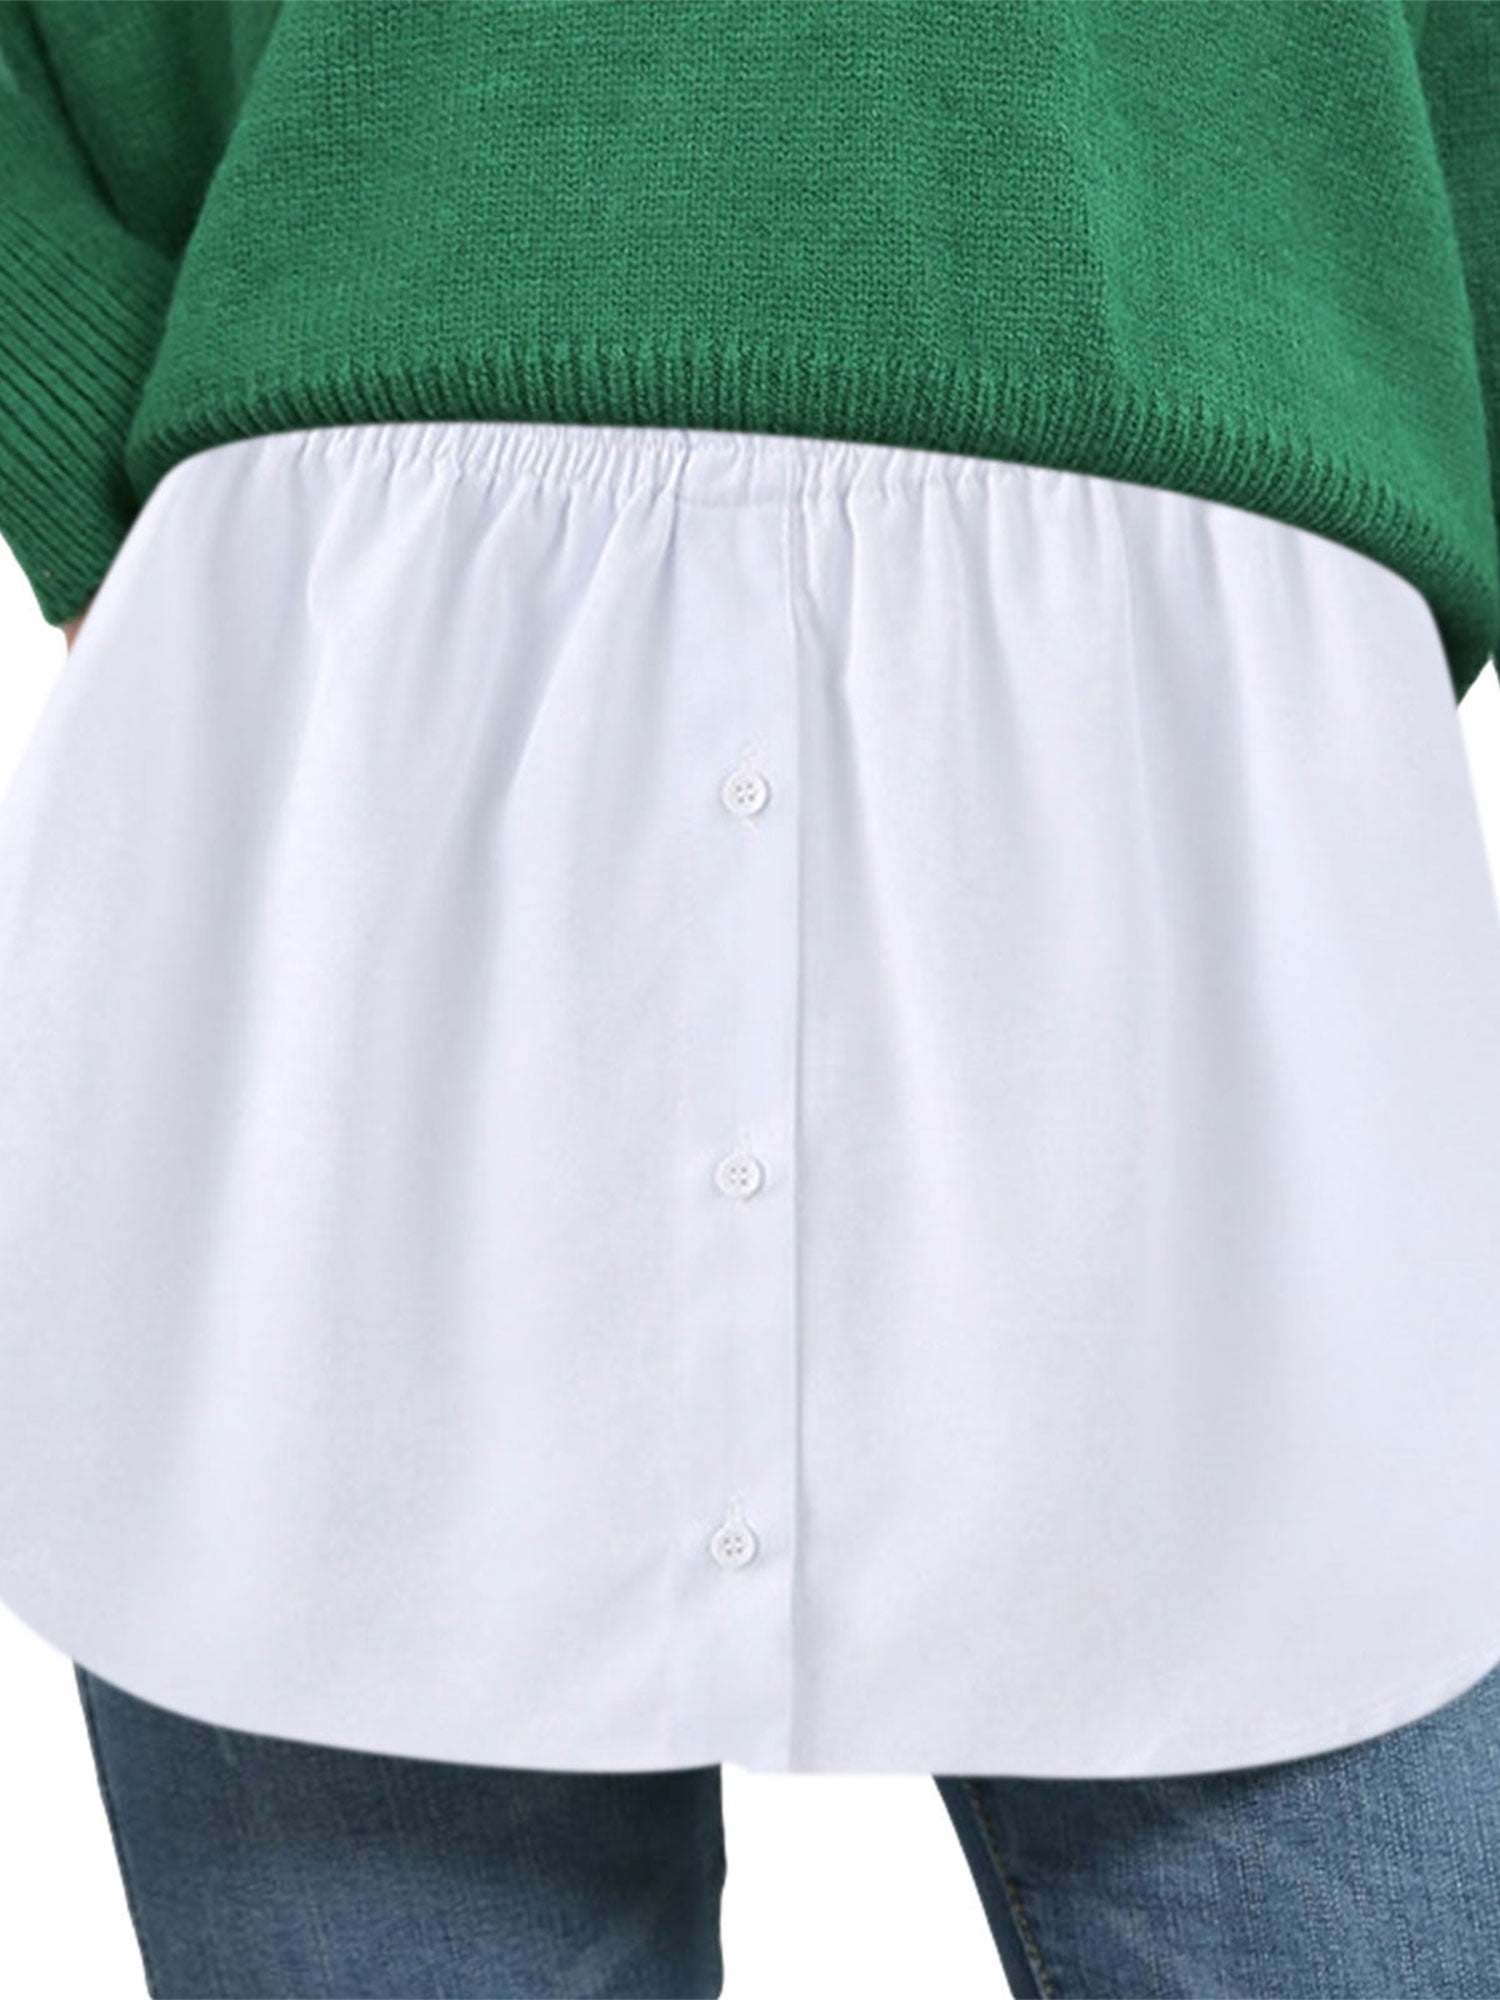 88AMZ Sweatshirt Base Skirt,Women Adjustable Layering Fake Top Lower Sweep,Versatile Fake Hem Skirt,Mini Skirt Shirt Extenders,Skirt Half-Length Splitting for Sweater,Sweatshirt